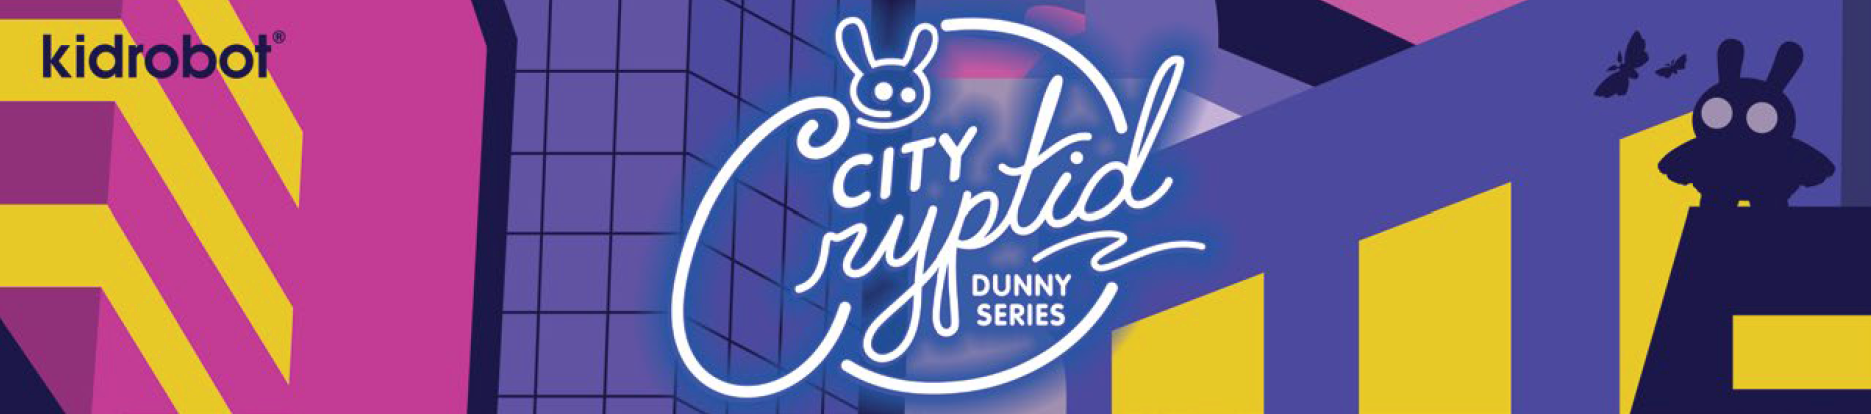 Chris Ryniak Mothman Dunny Art Figure City Cryptid Dunny Series by Kidrobot